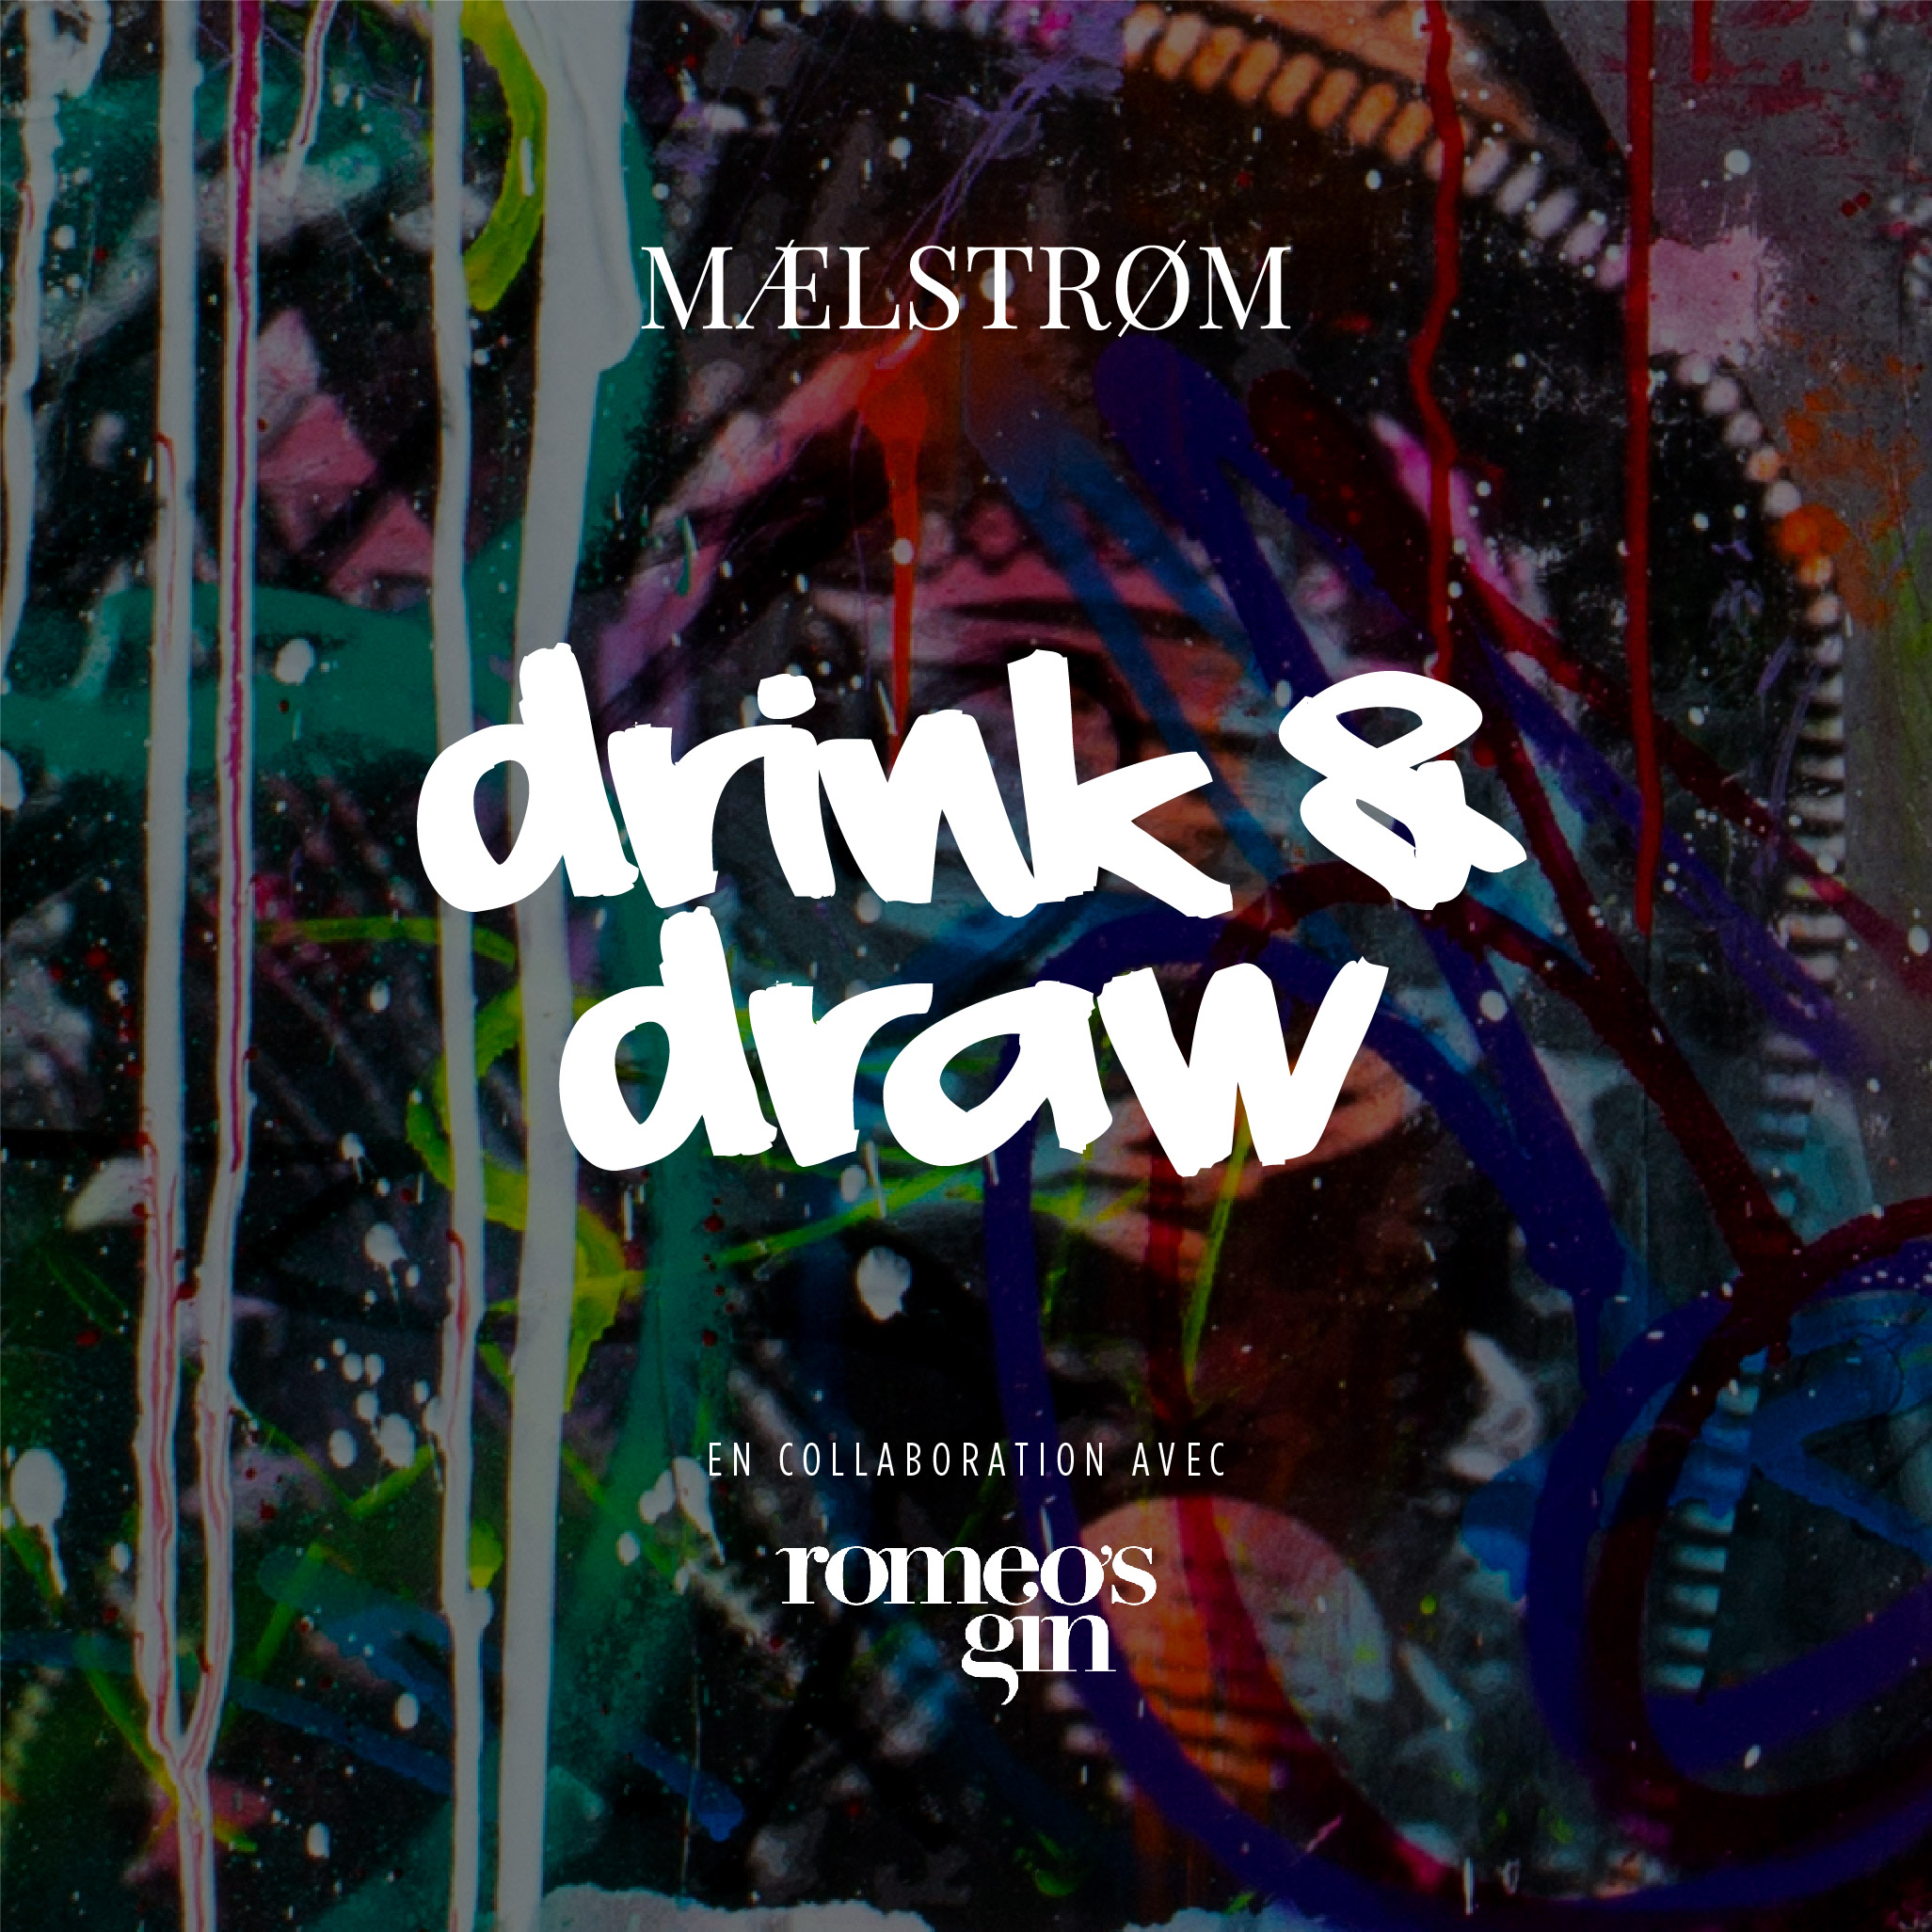 Drink & Draw